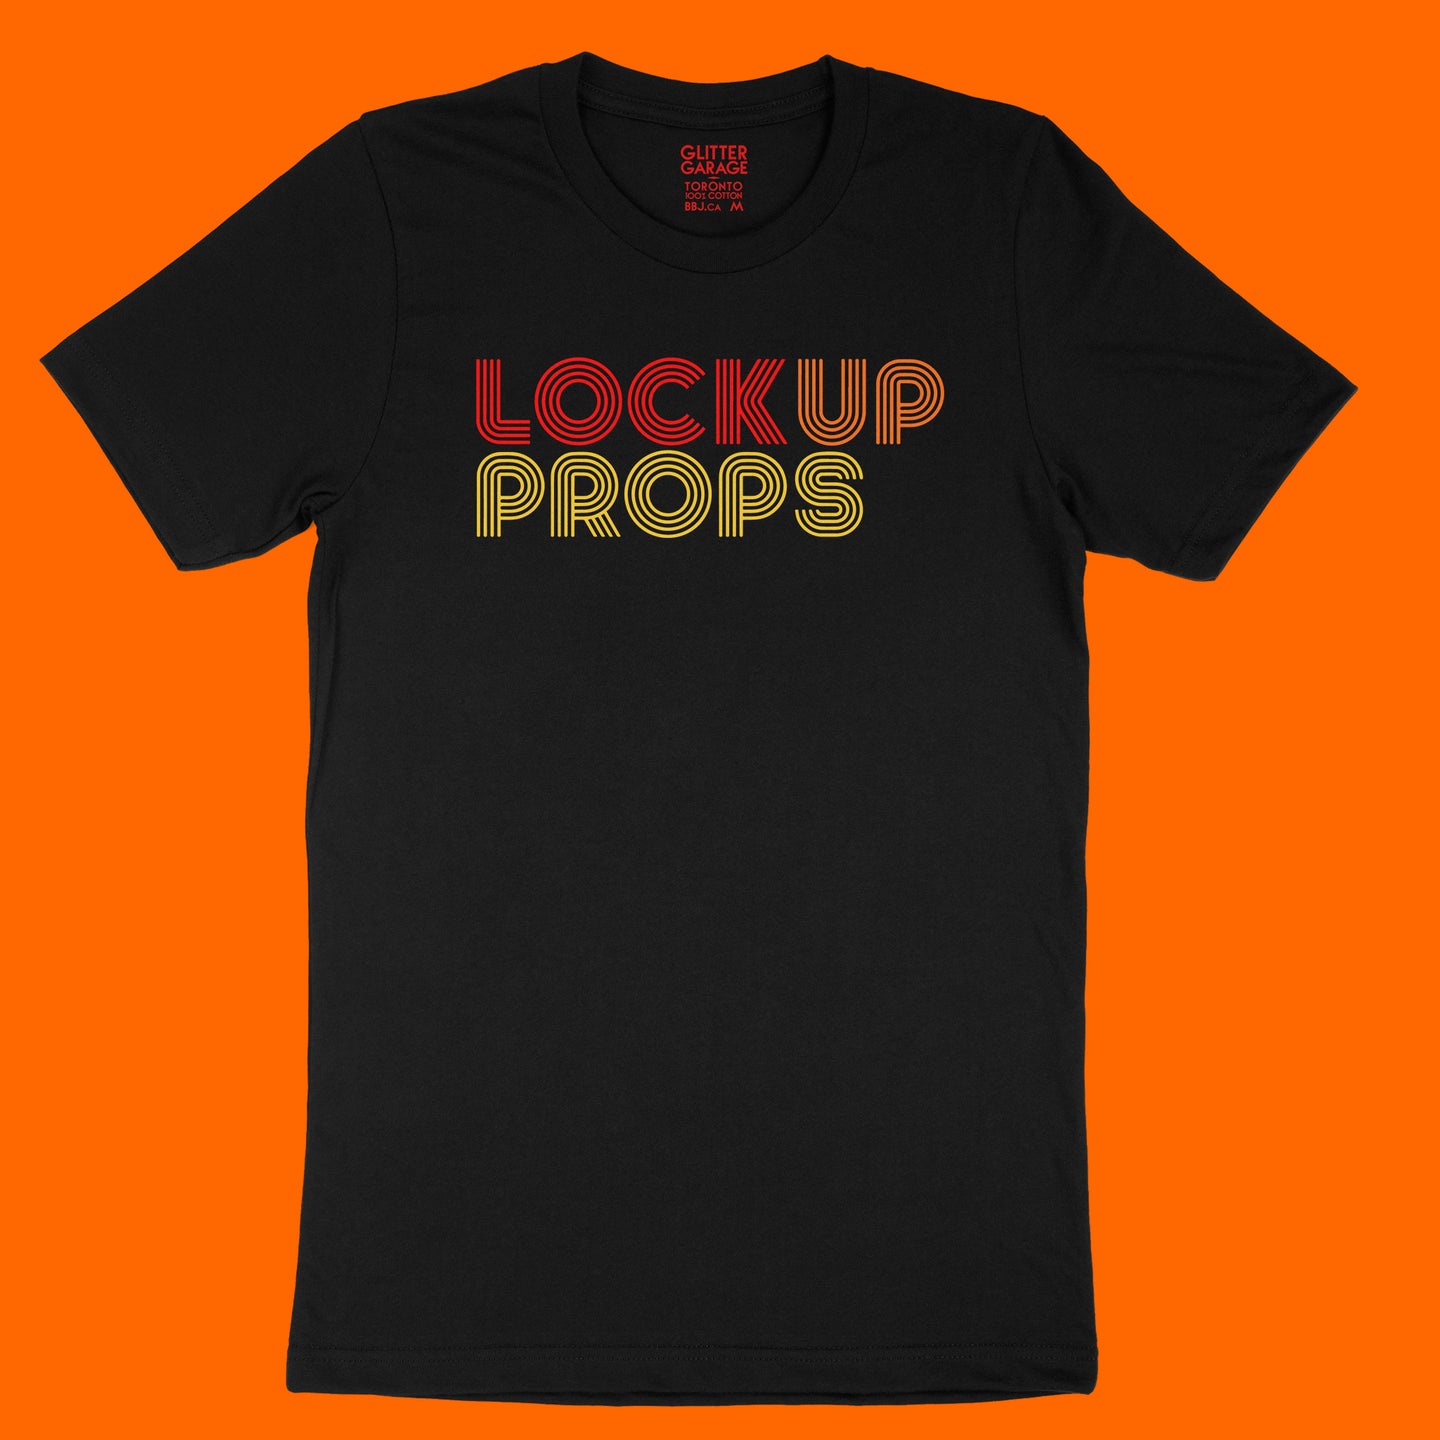 Lock Up Props red, orange, yellow retro type logo on black unisex premium quality tee by BBJ / Glitter Garage